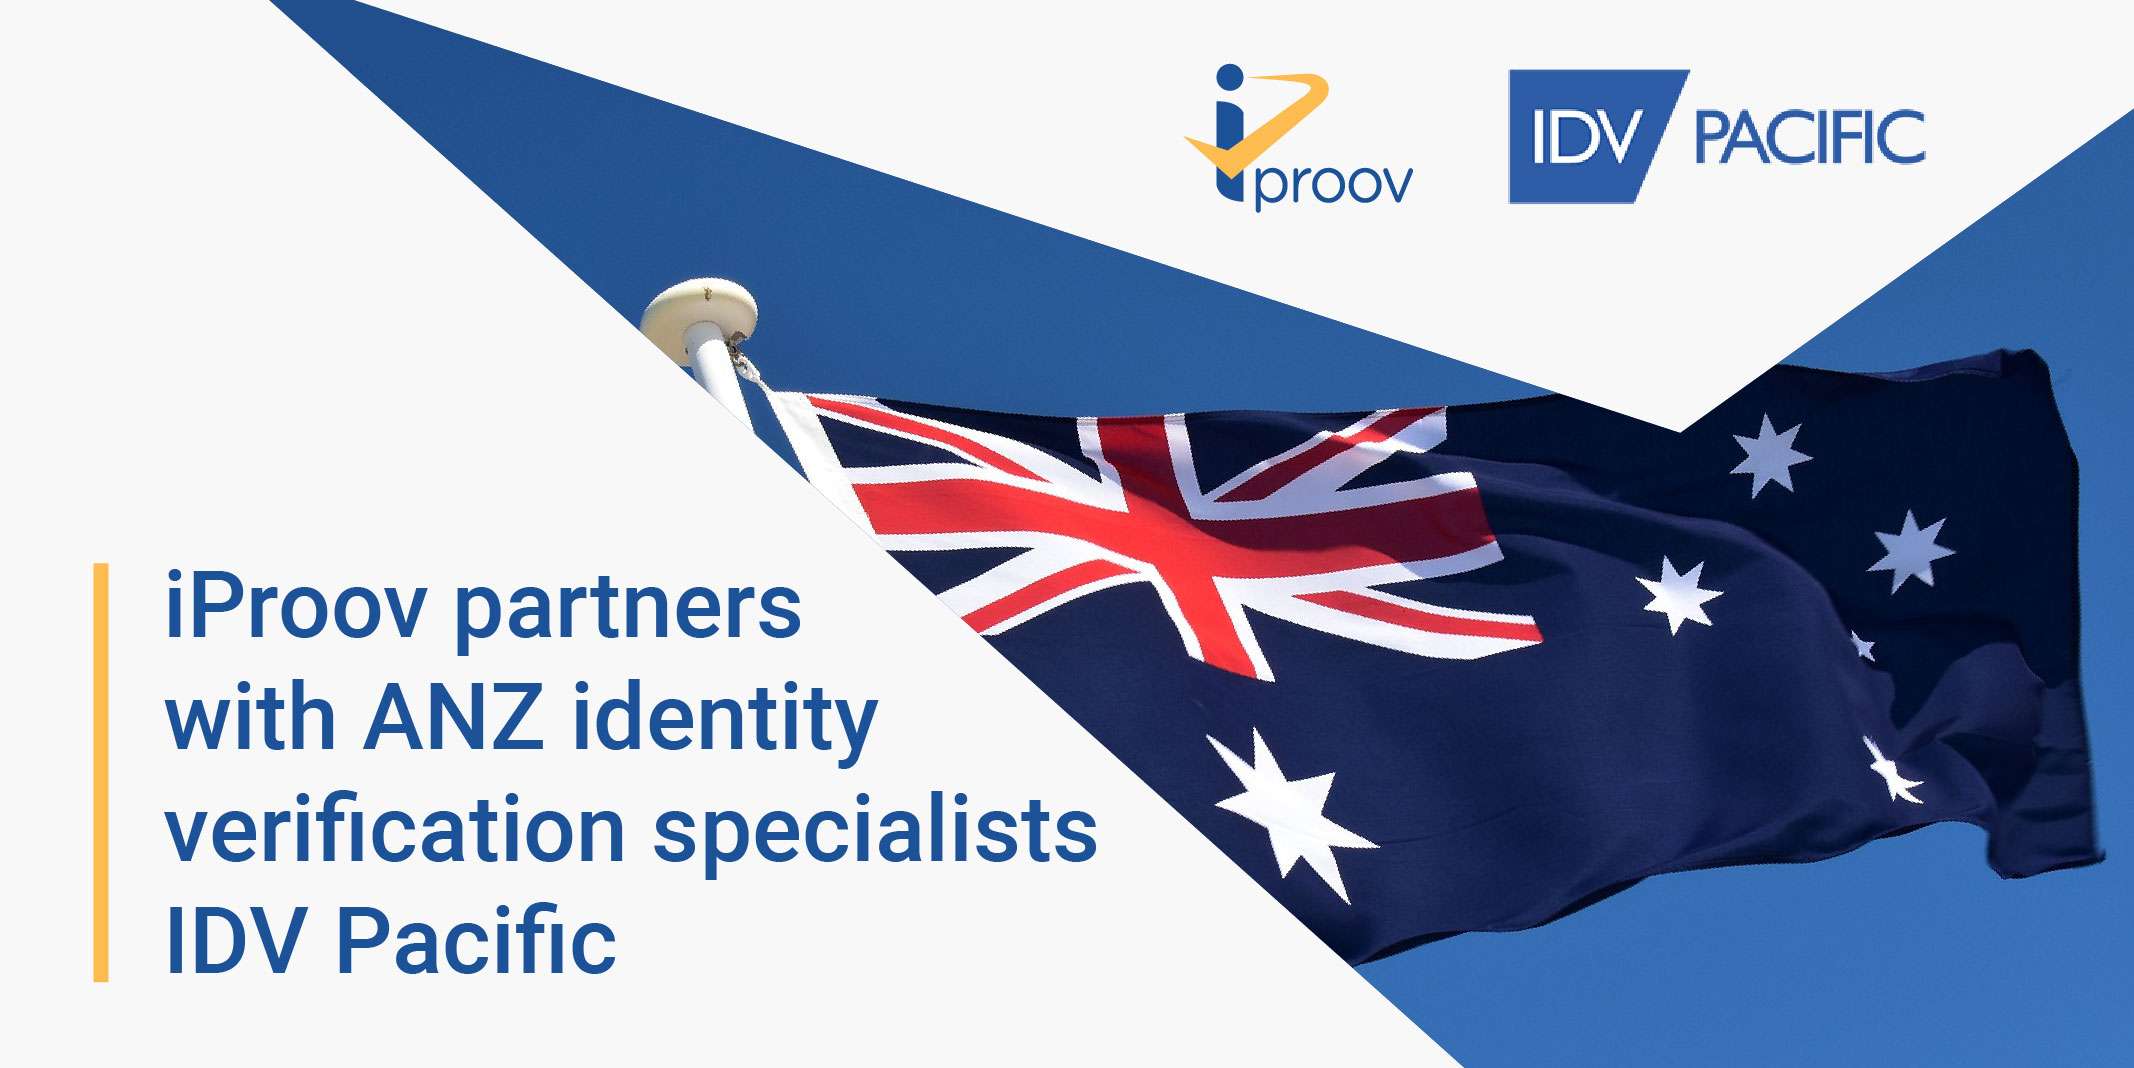 iProov & IDV Pacific